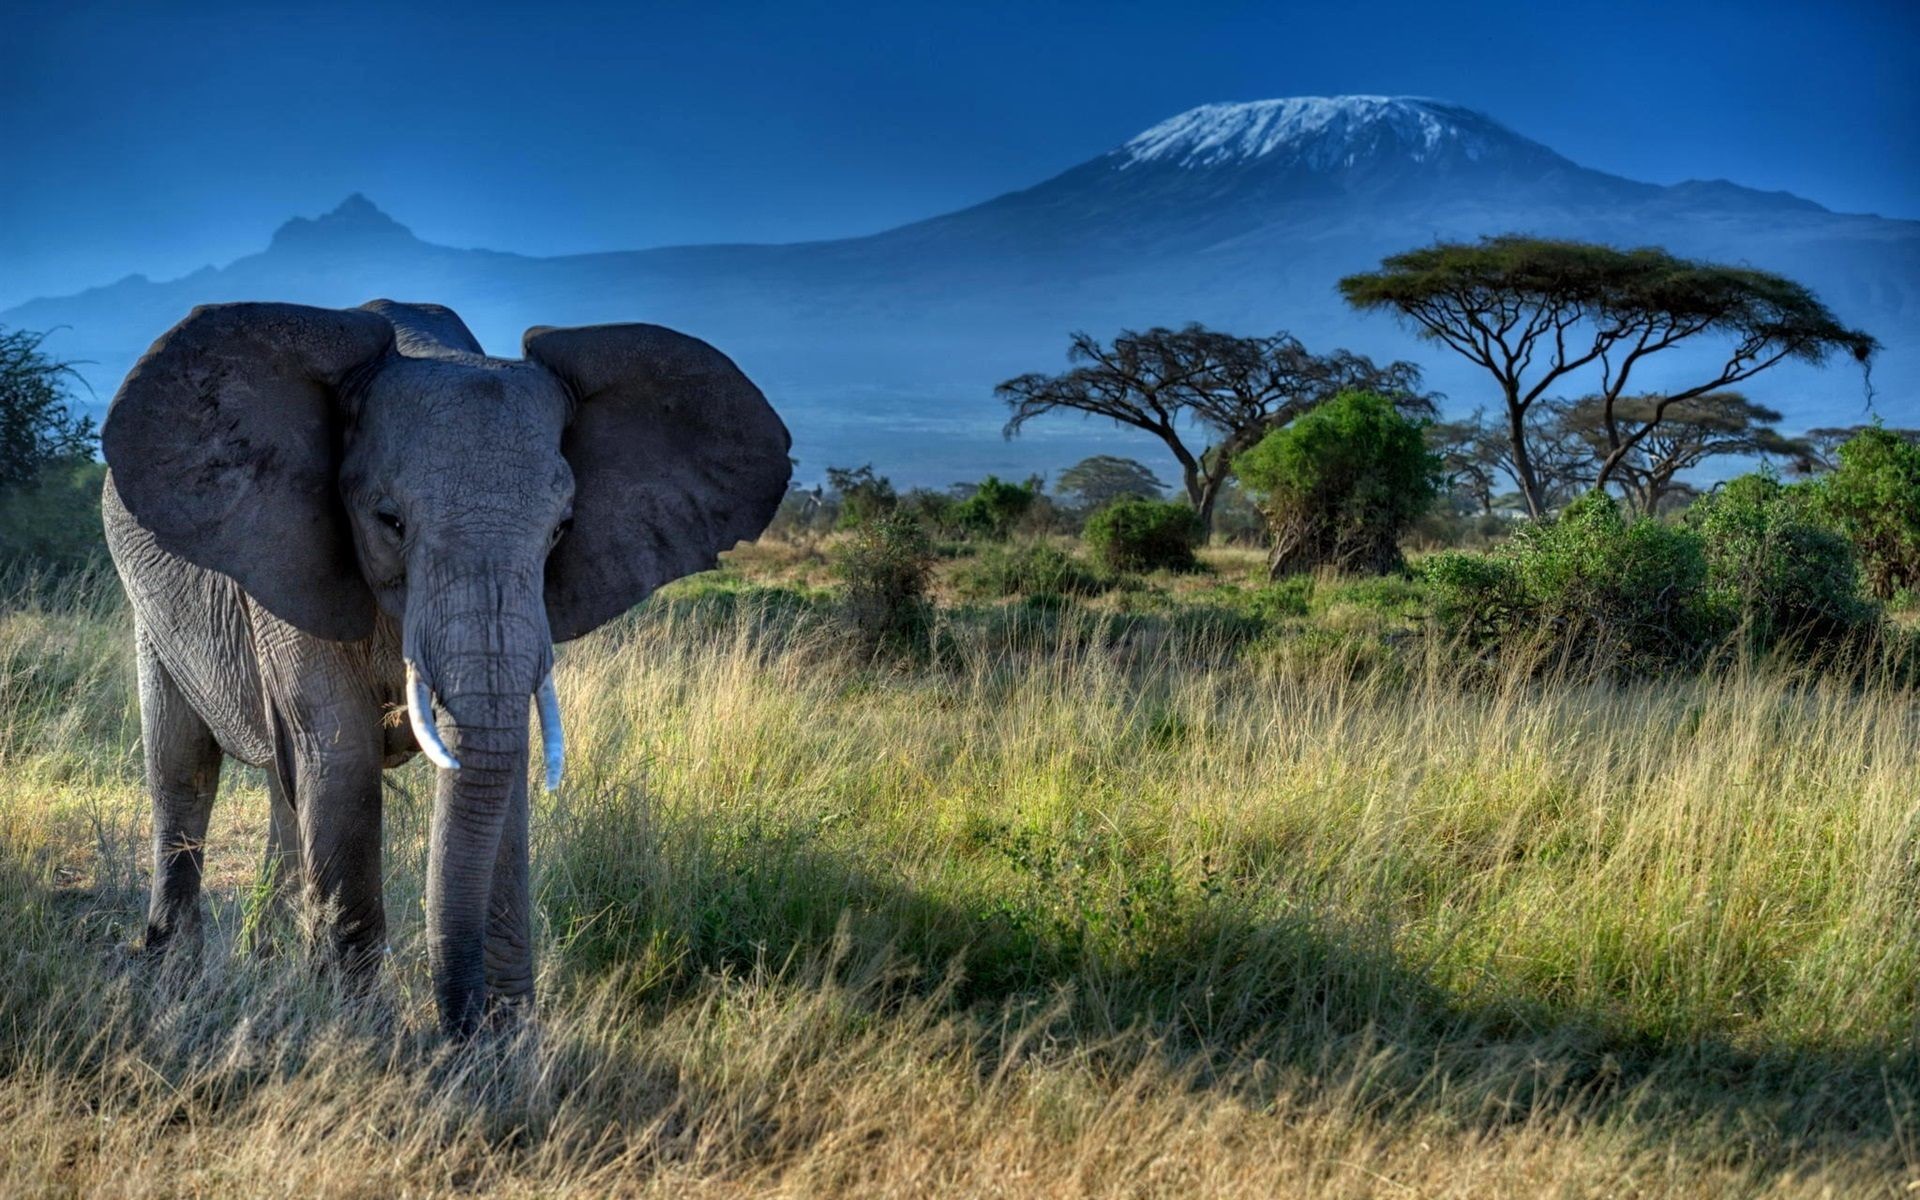 elefant iphone wallpaper,elefant,tierwelt,elefanten und mammuts,landtier,natürliche landschaft